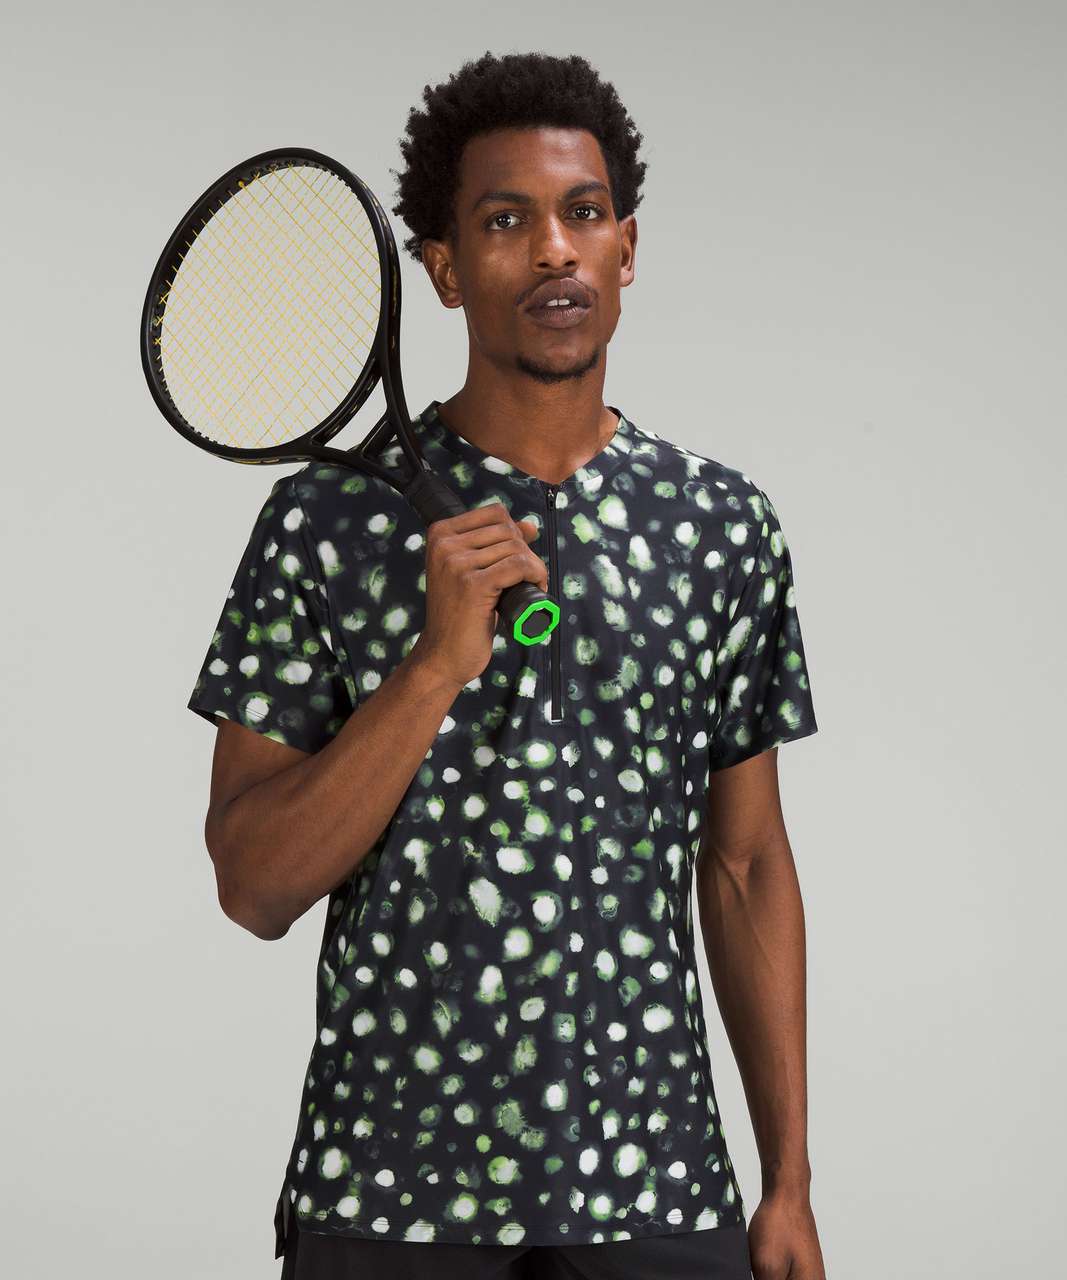 Lululemon Vented Tennis Short Sleeve Shirt - Haze Dot Inverse Black Multi